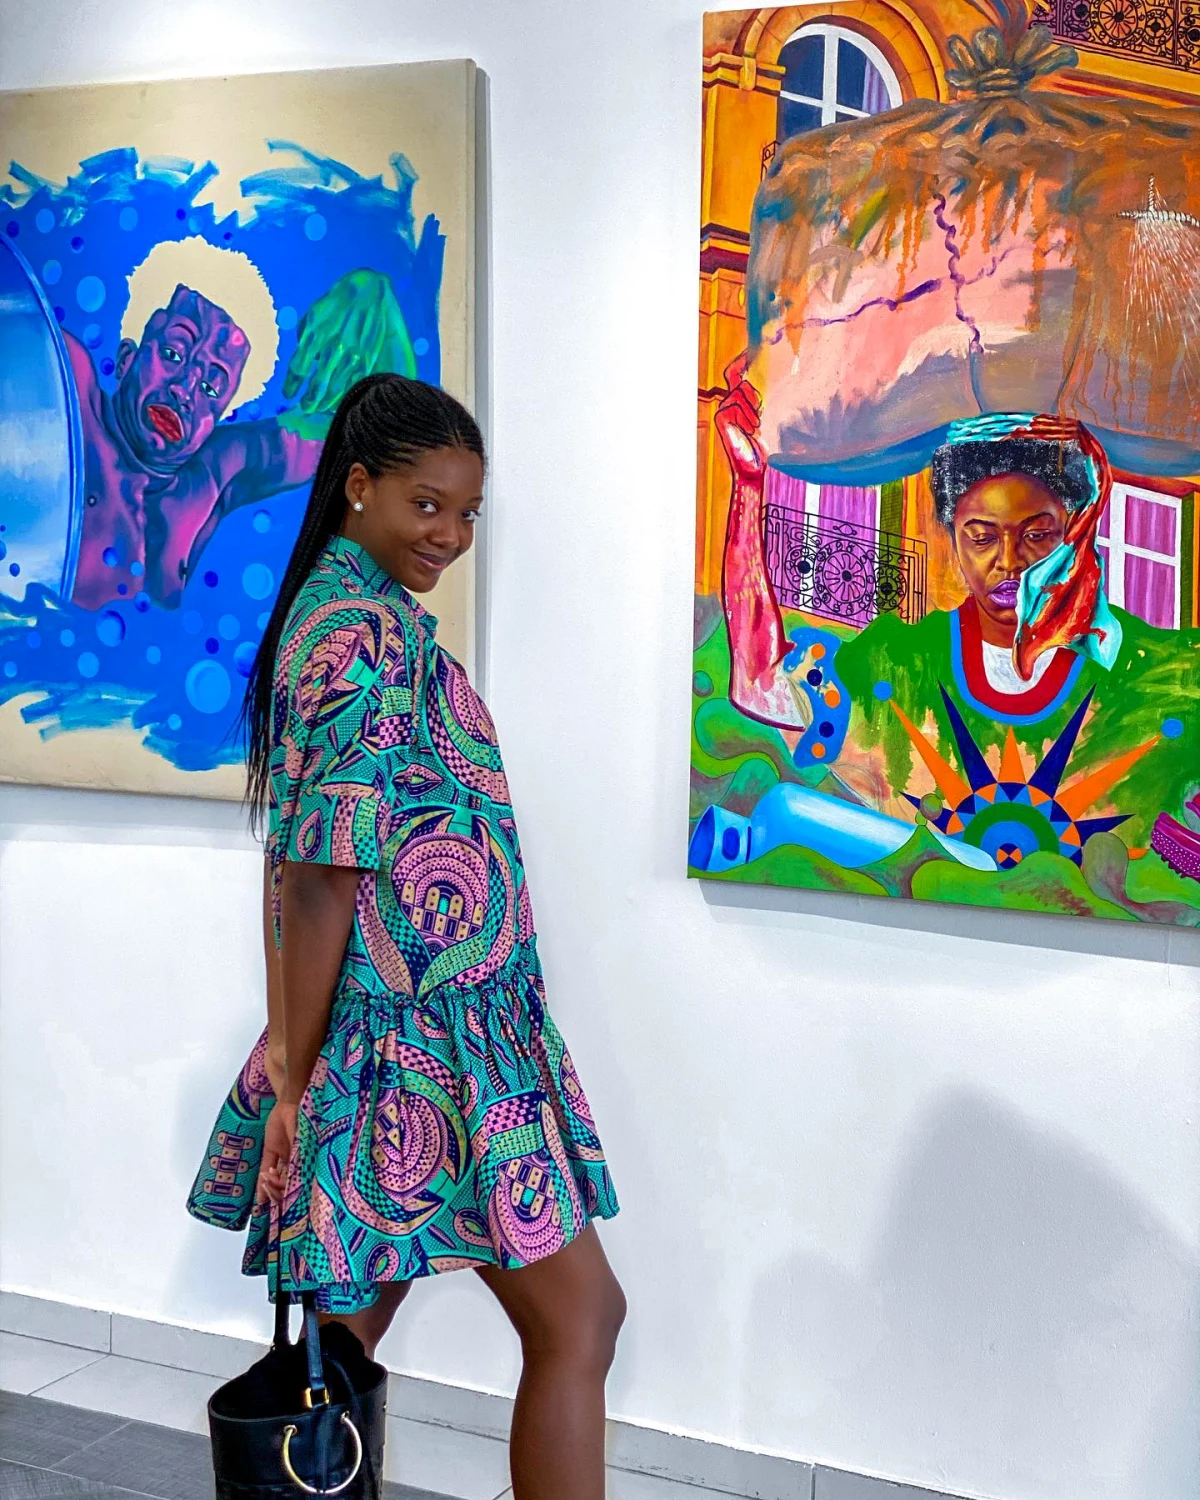 modele de robe africaine en wax couleur bleu gallerie d art peintures